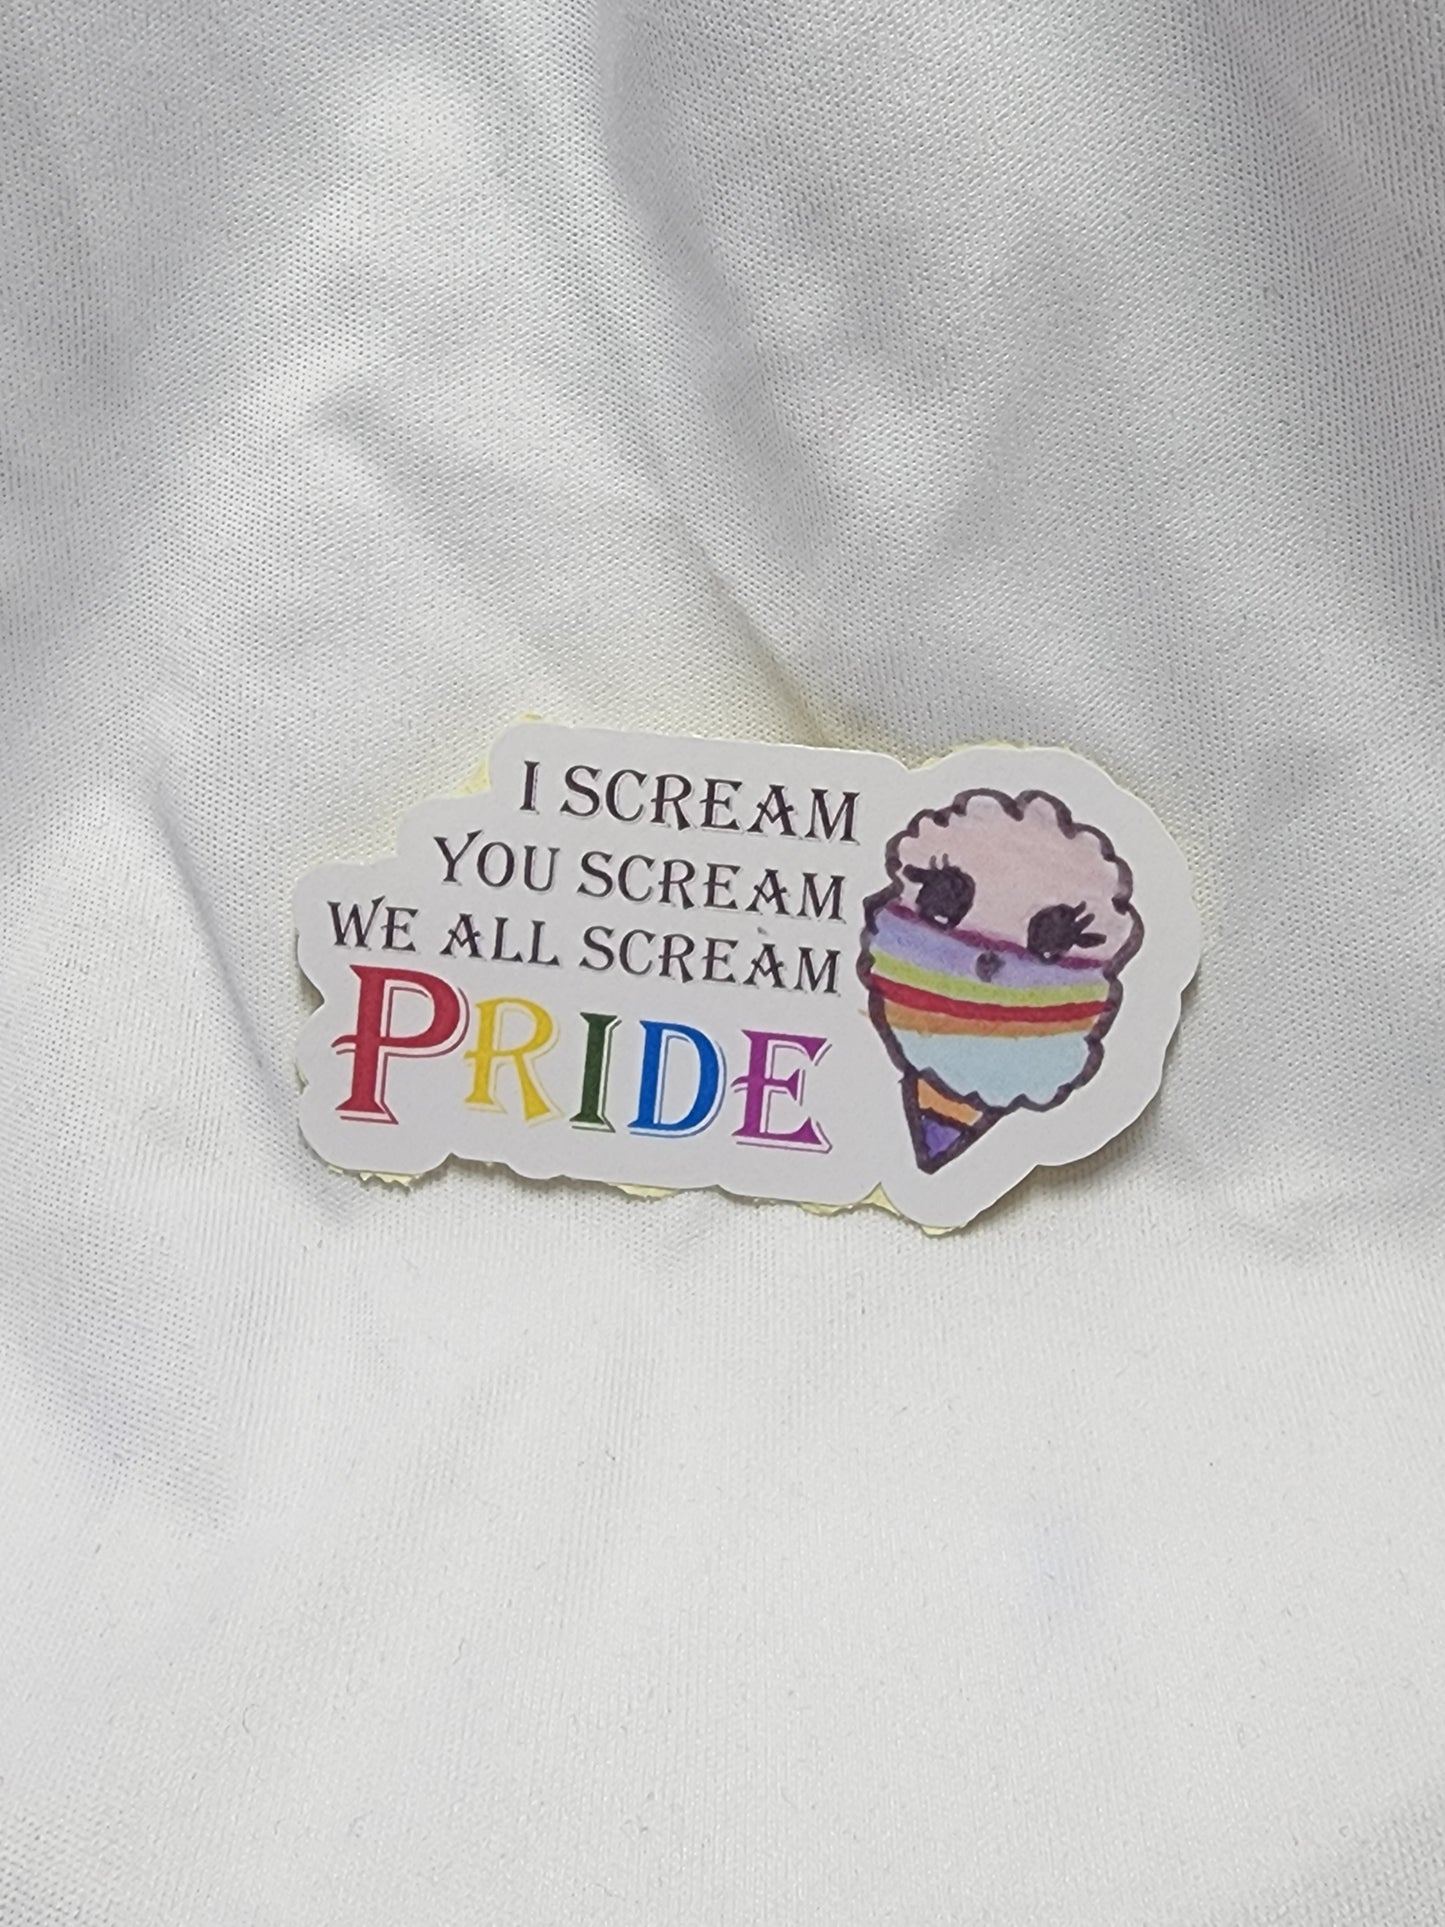 Screm pride sticker